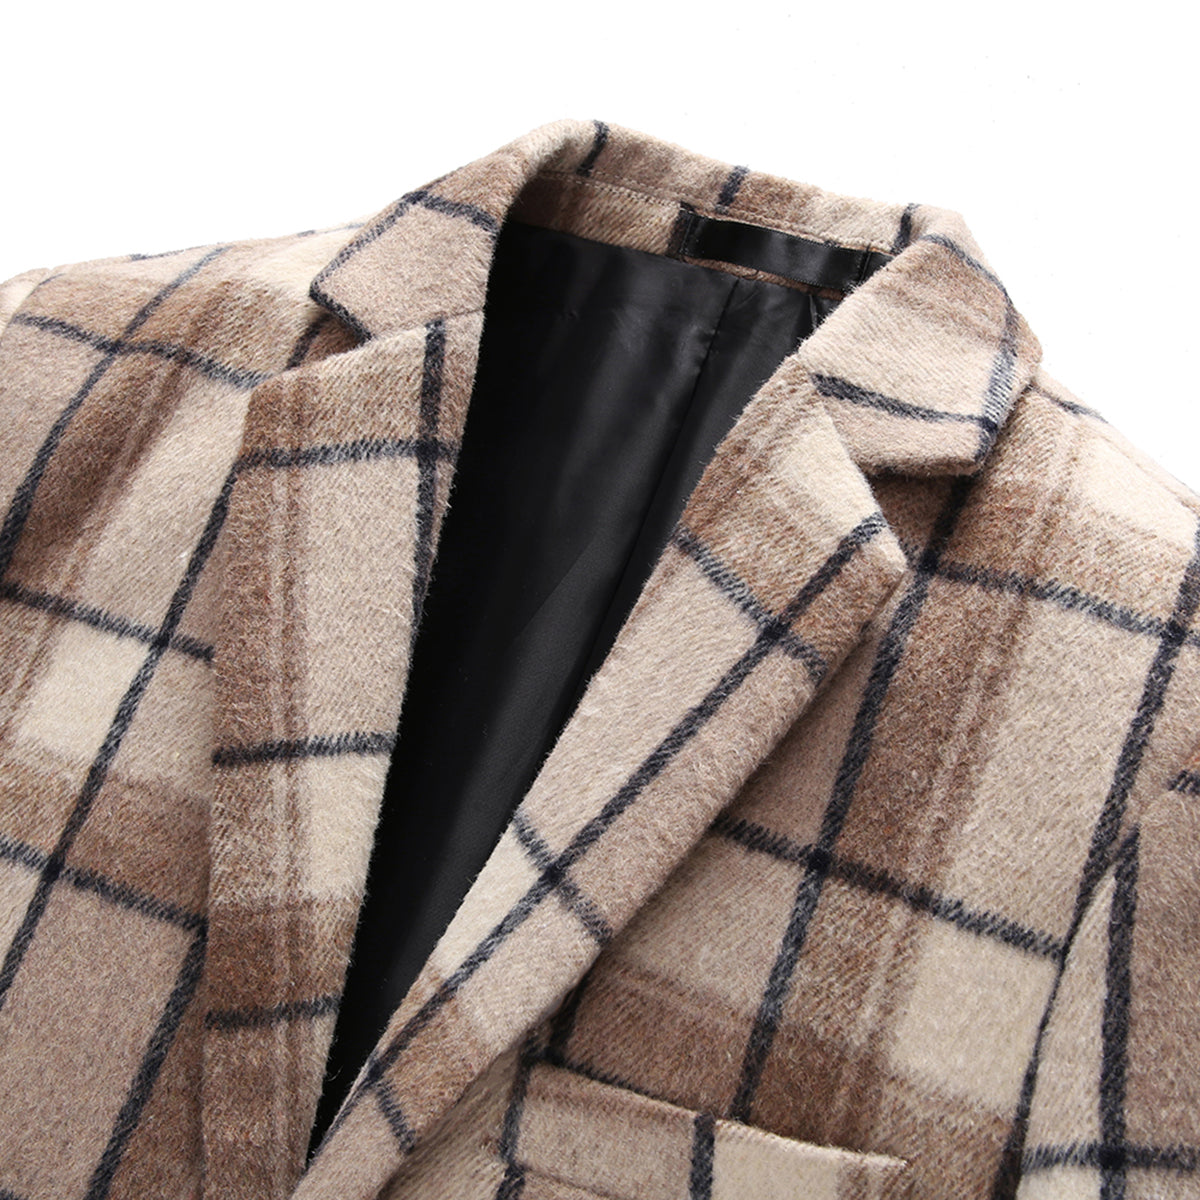 Men's Autumn Jacket Plaid Two Buttons Casual Blazer Khaki